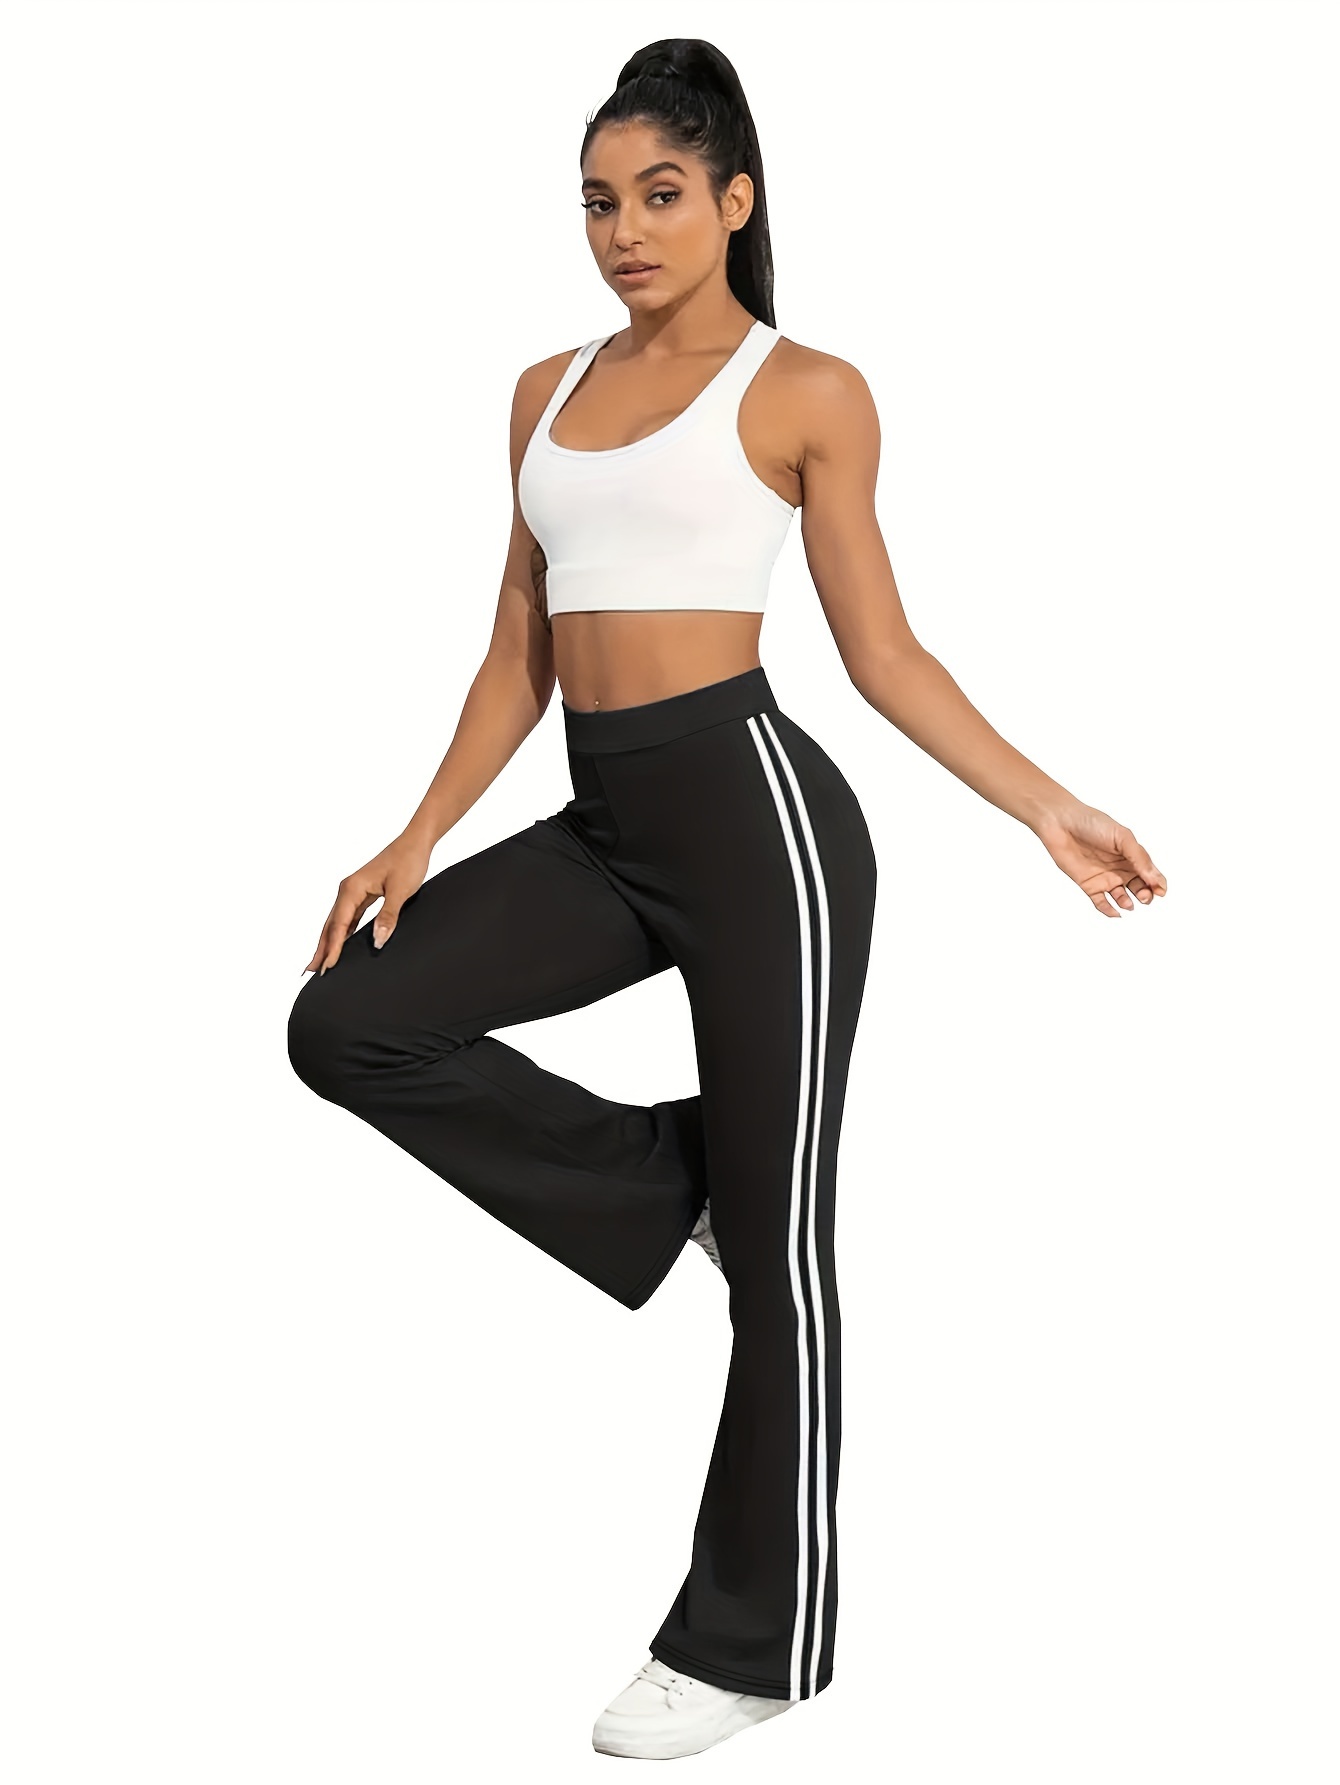 3 pcs womens sports pants set plus size contrast striped high waist stretchy flare leg fitness pants 3 piece set